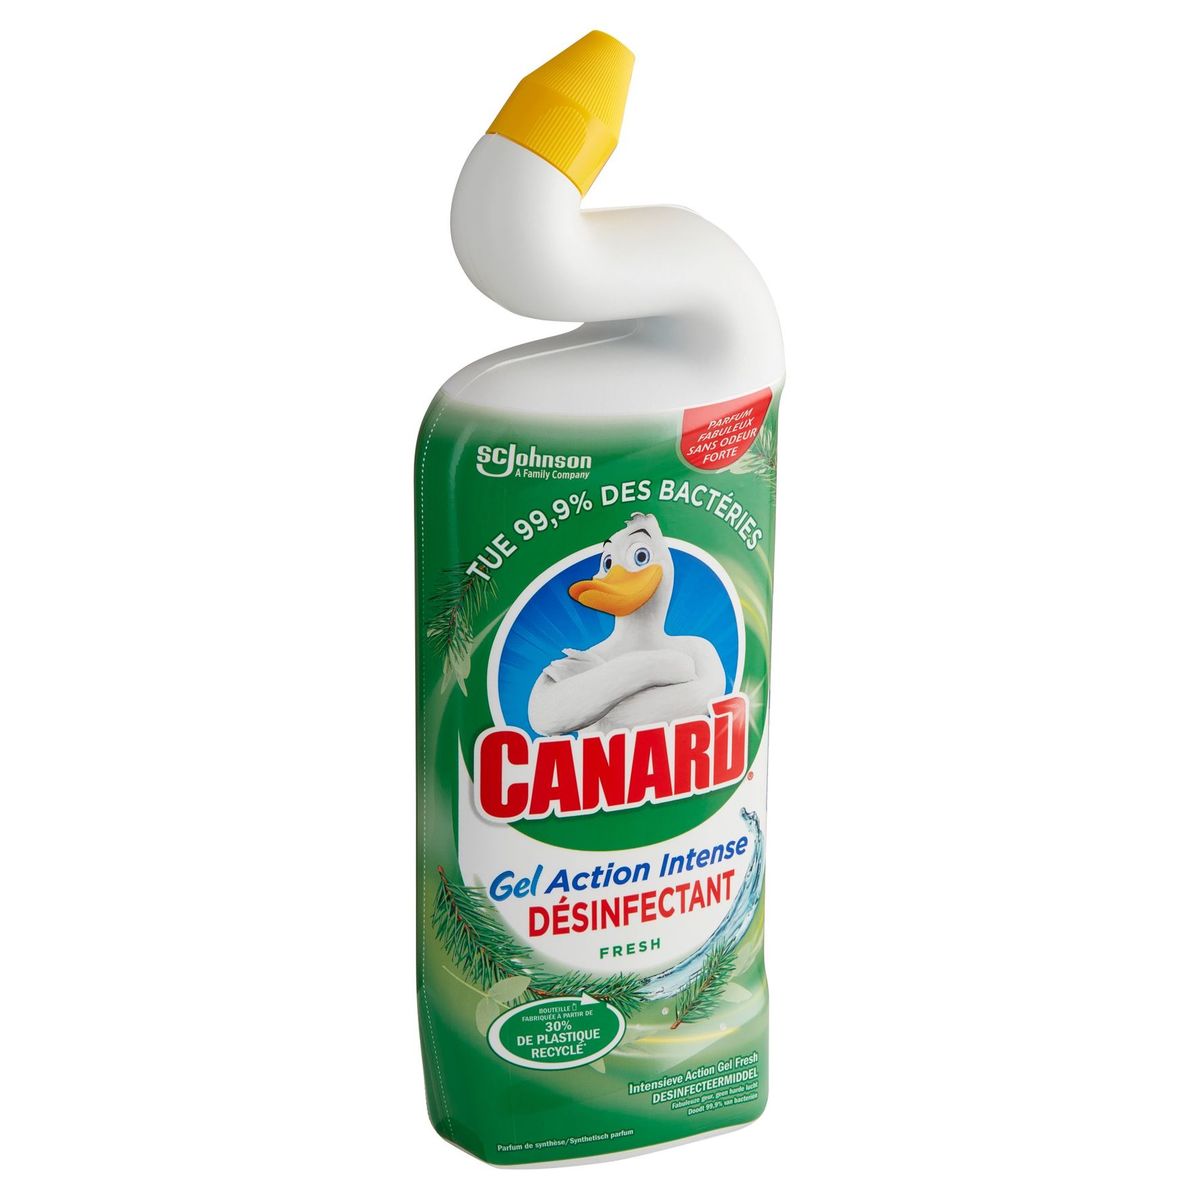 Canrad Gel Action Intense Désinfectant Fresh 750 ml